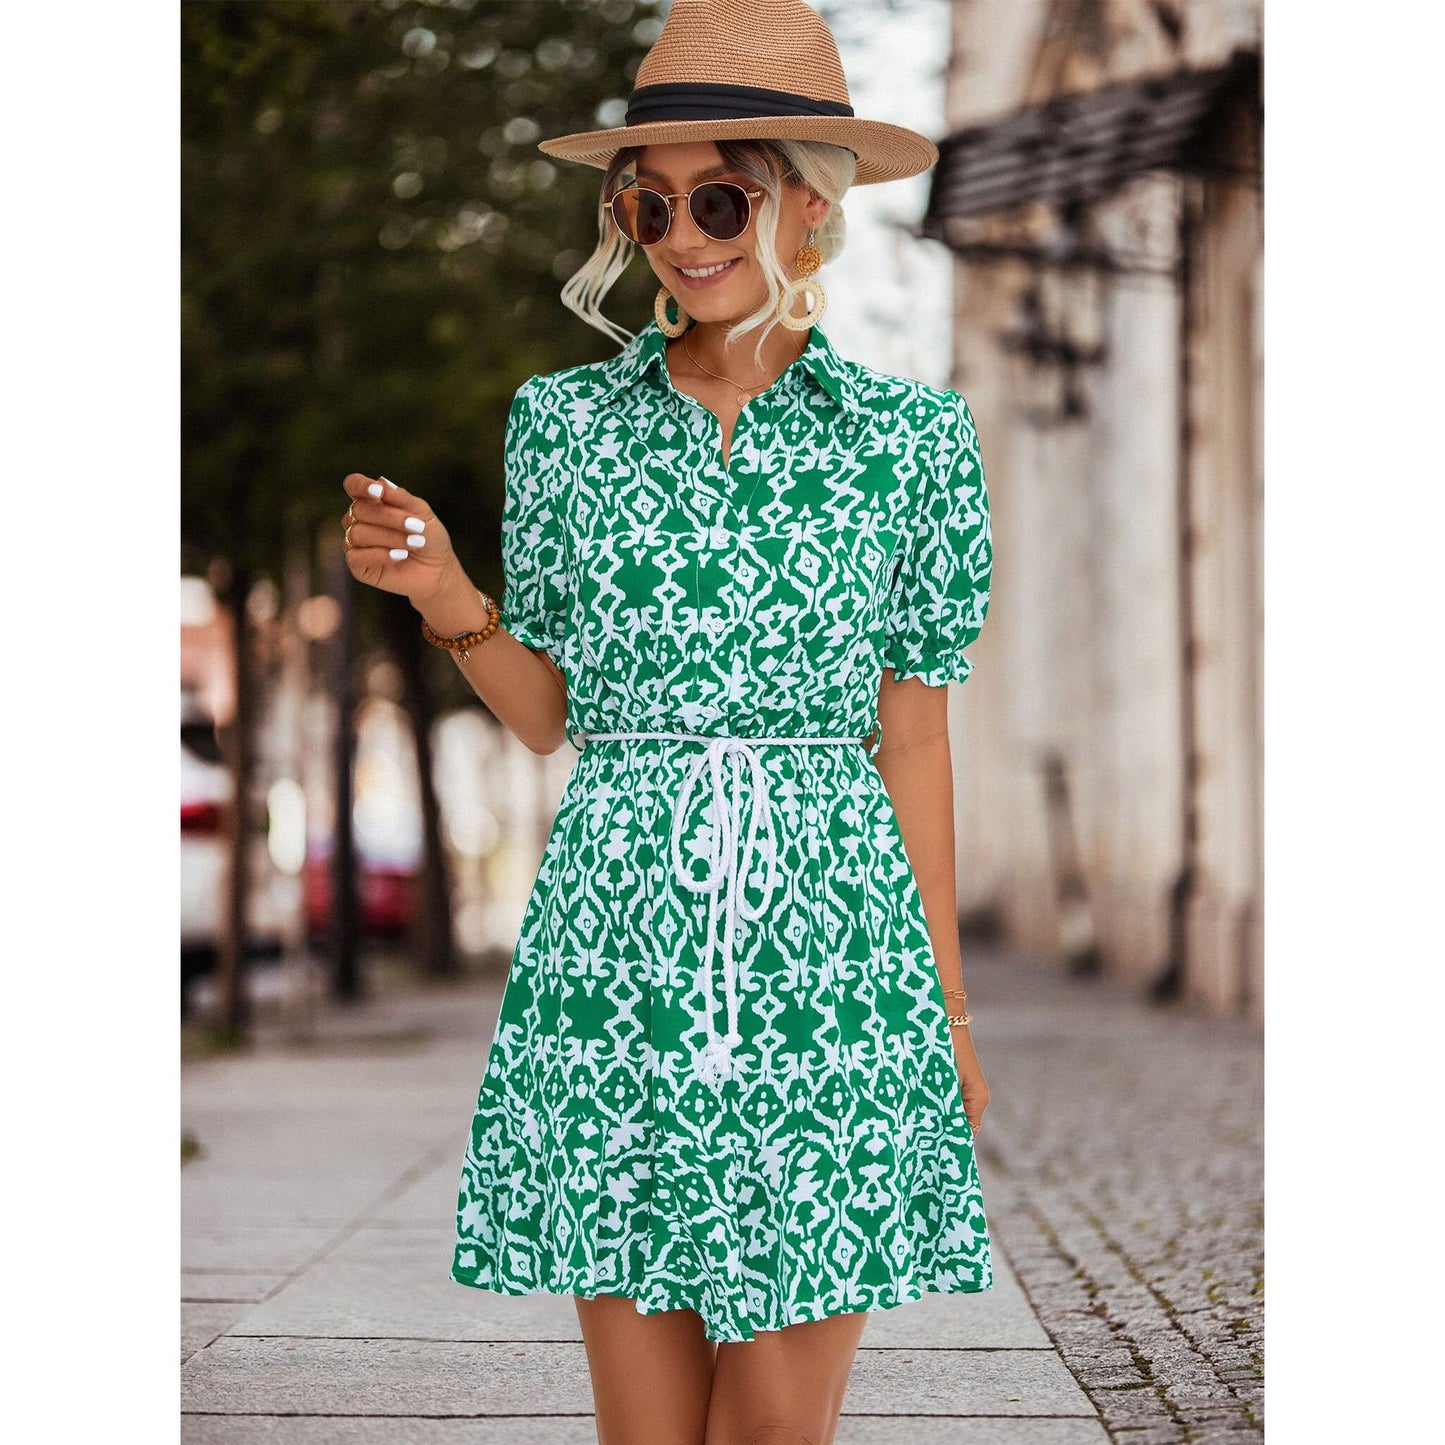 Summer Print Dress - ShadeSailgarden